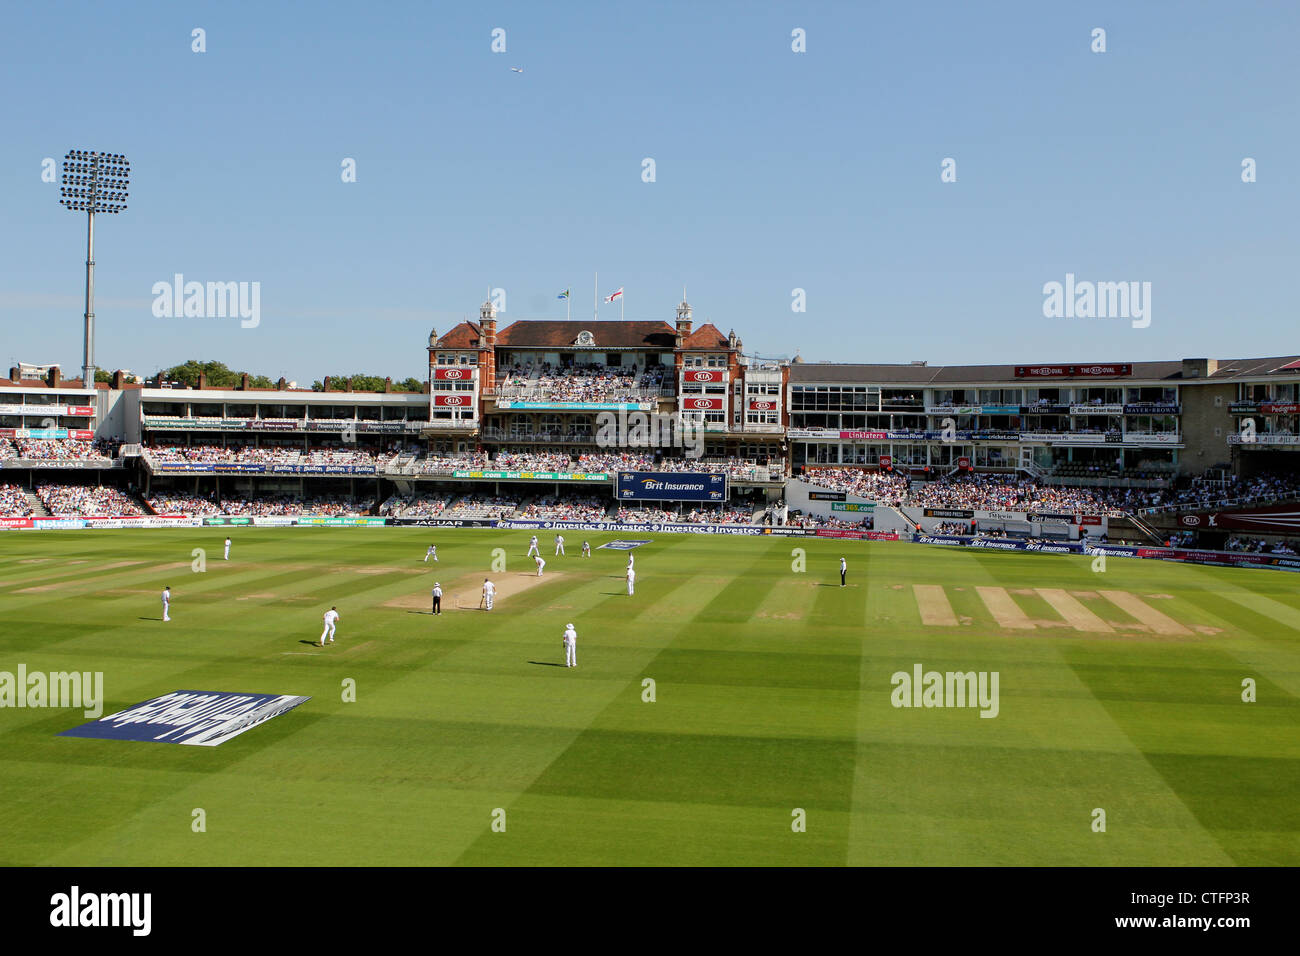 England v South Africa. 2nd Test. 2012. England batting. The Oval cricket ground, Kennington, London. Stock Photo